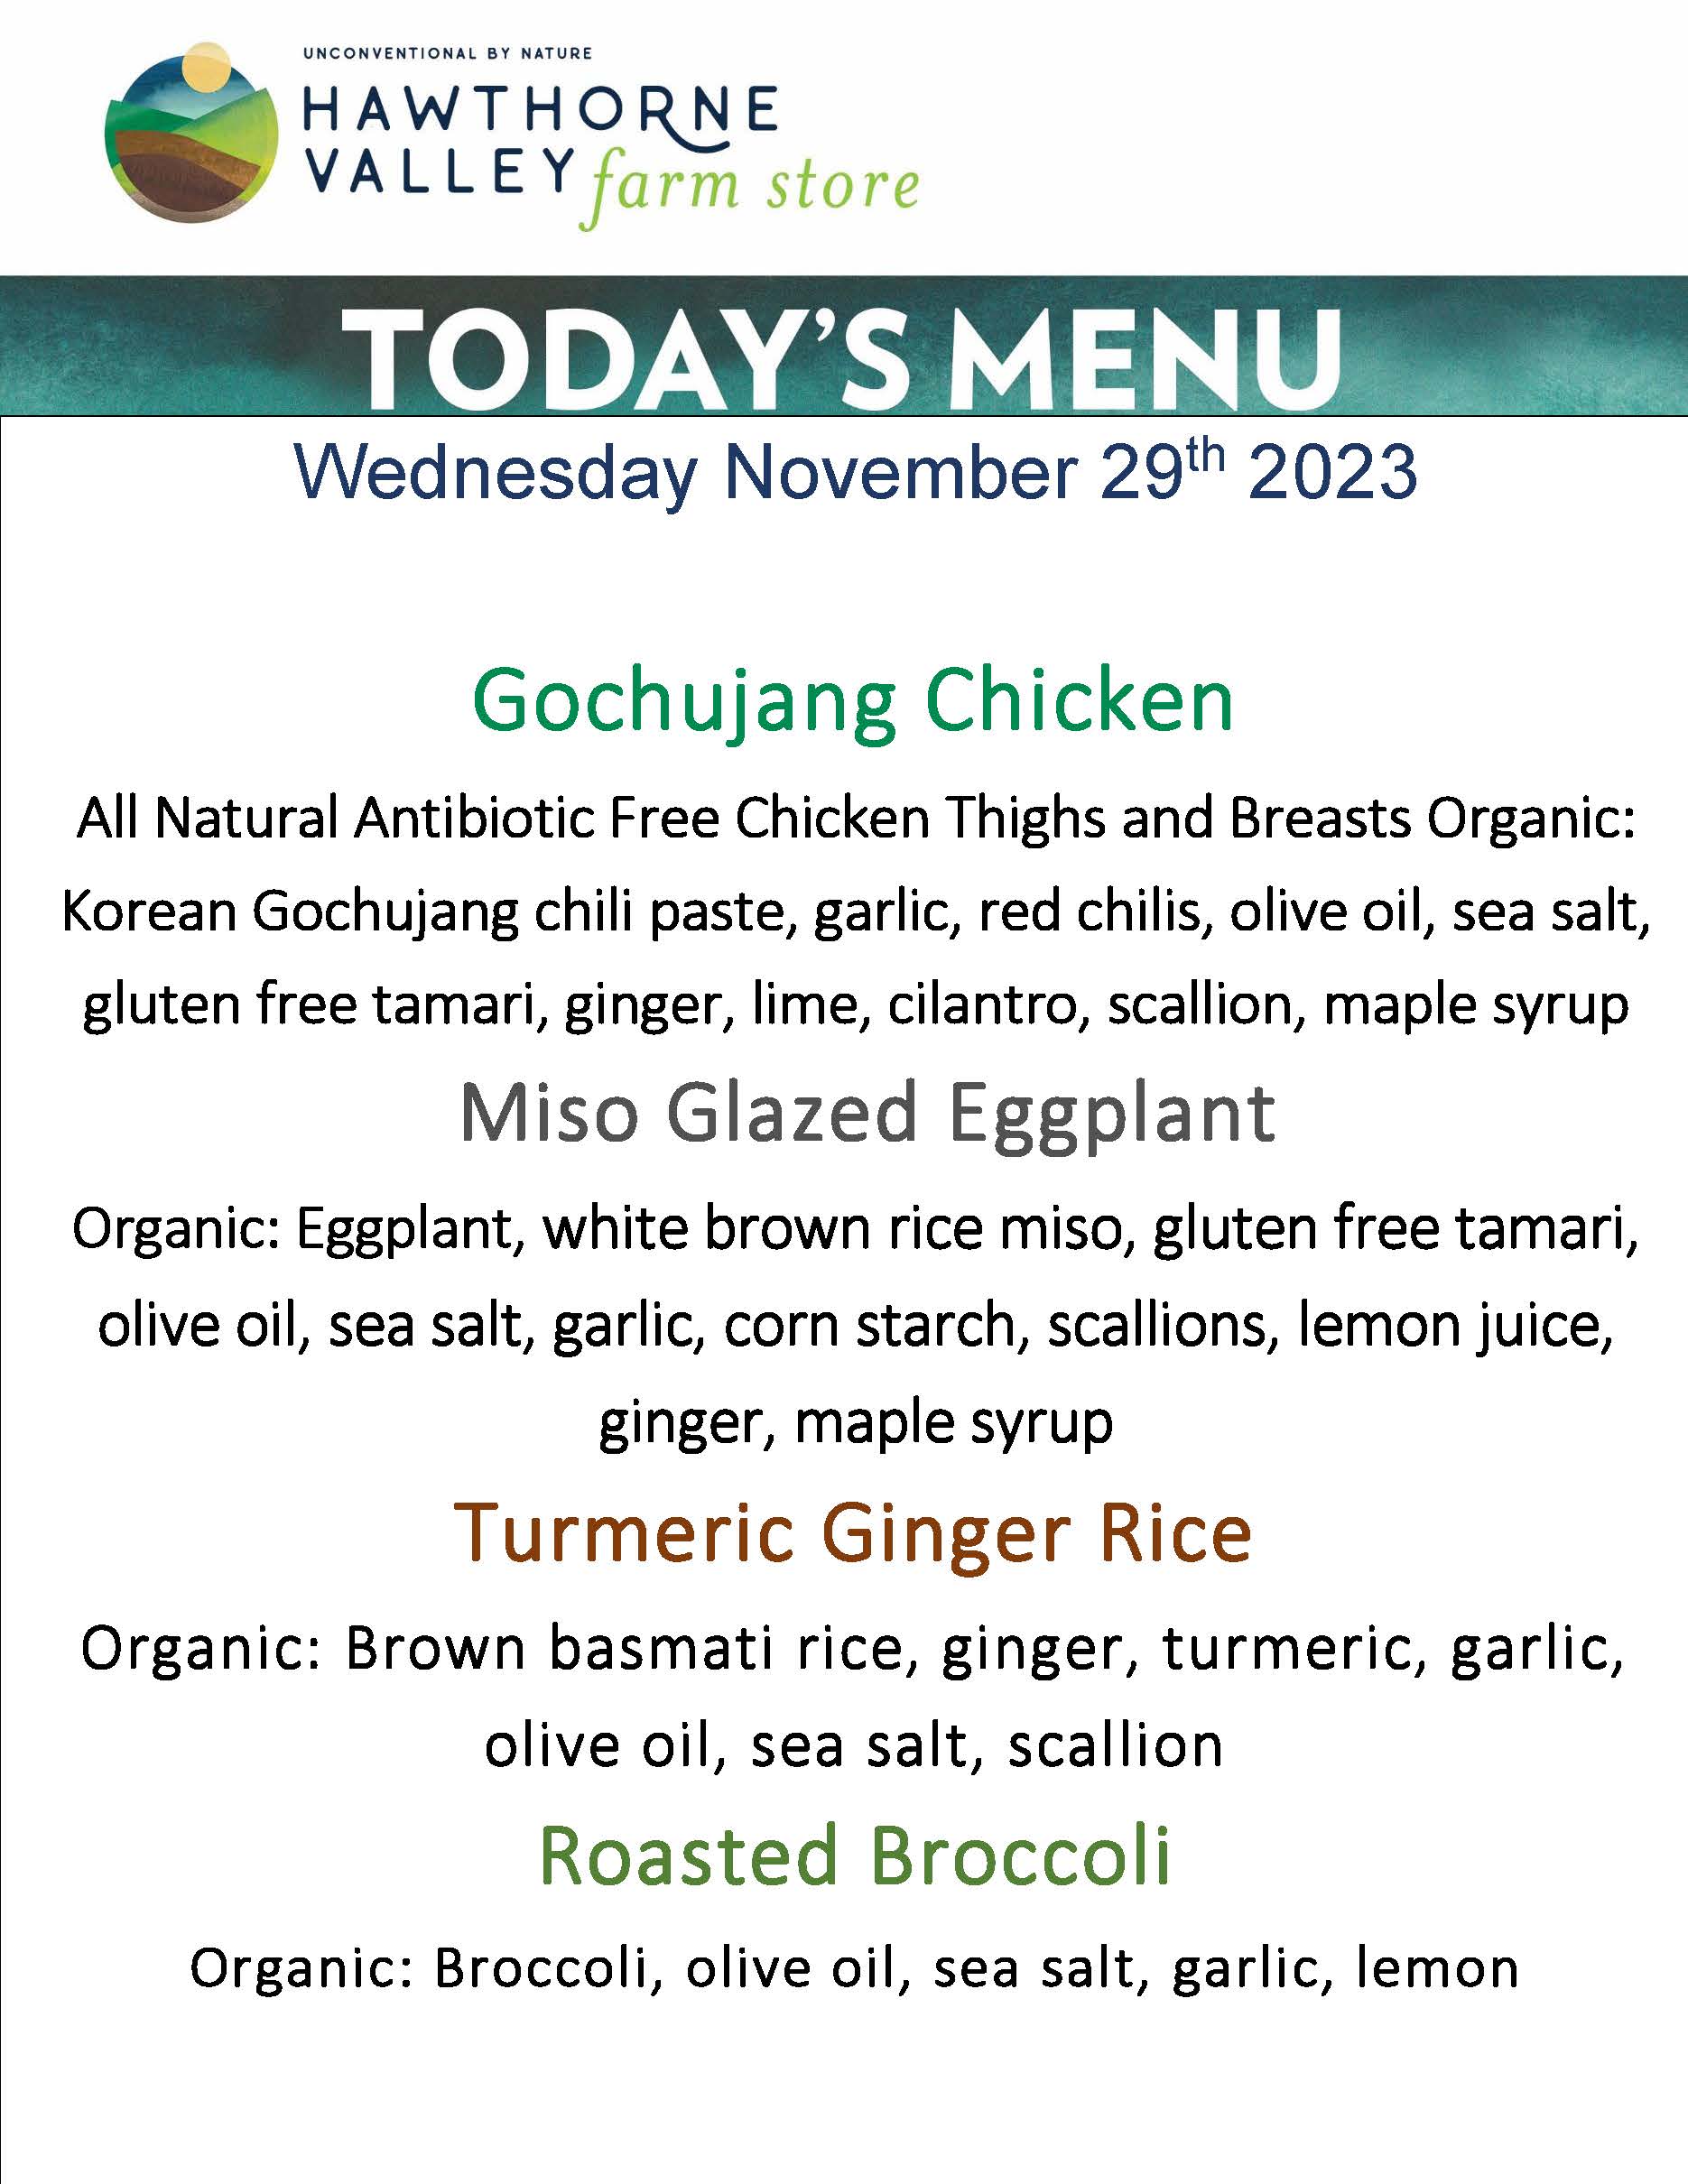 Wednesday November 29th menu. Gochujang chicken, miso glazed eggplant, turmeric ginger rice, and roasted broccoli. 